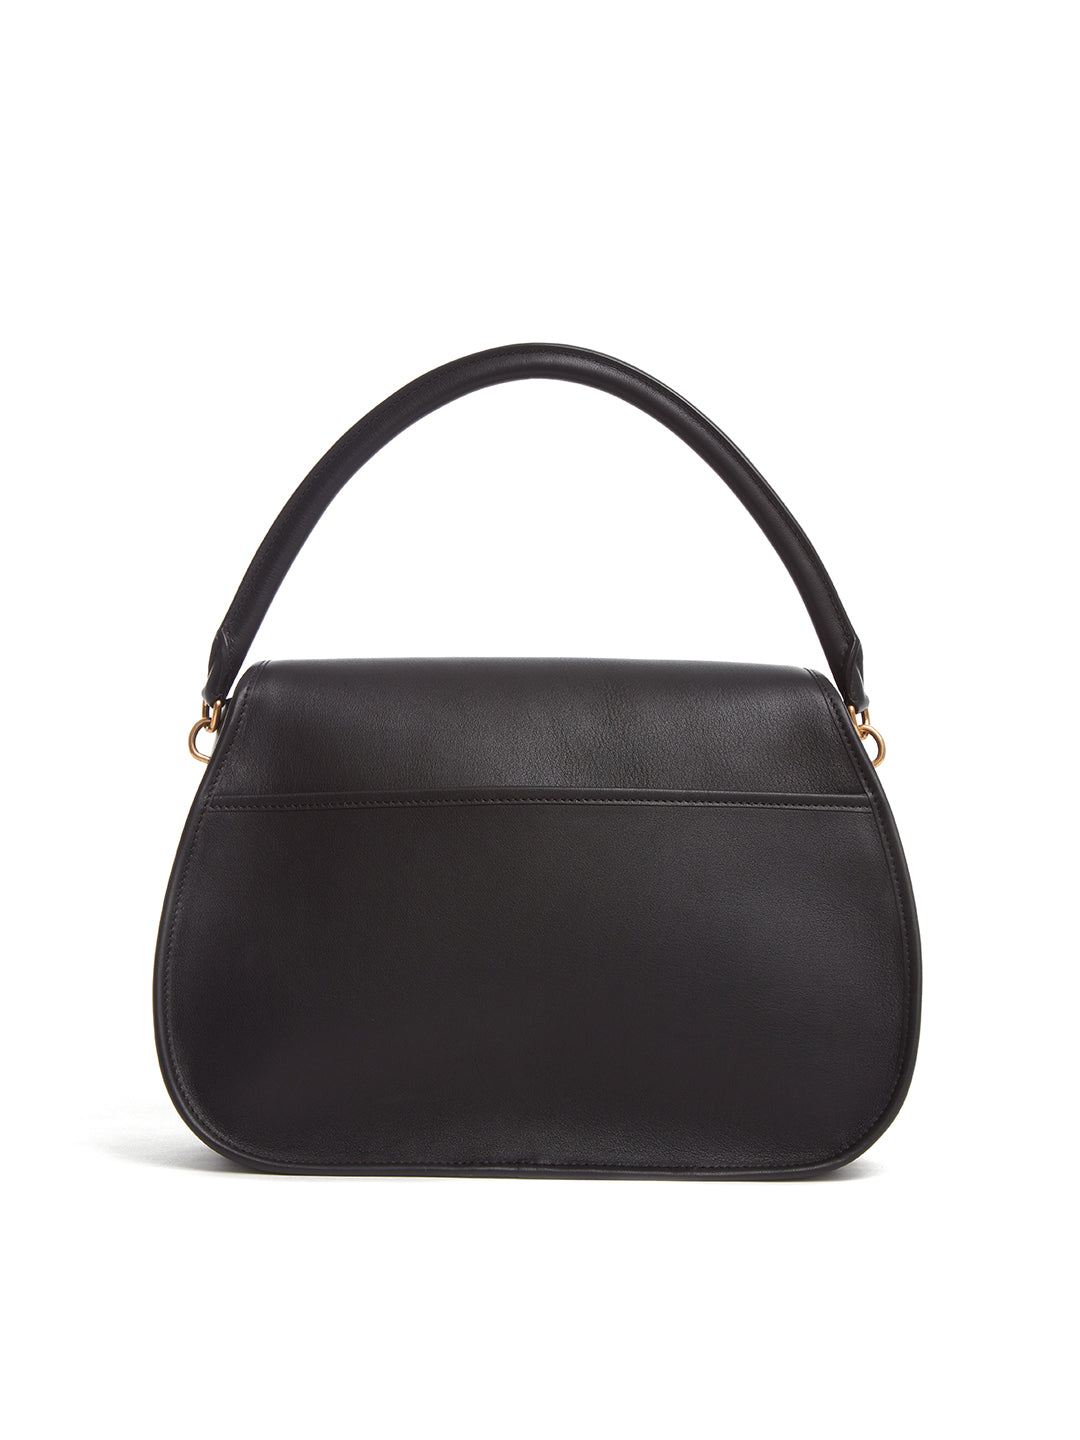 Christy Leather Top Handle Bag